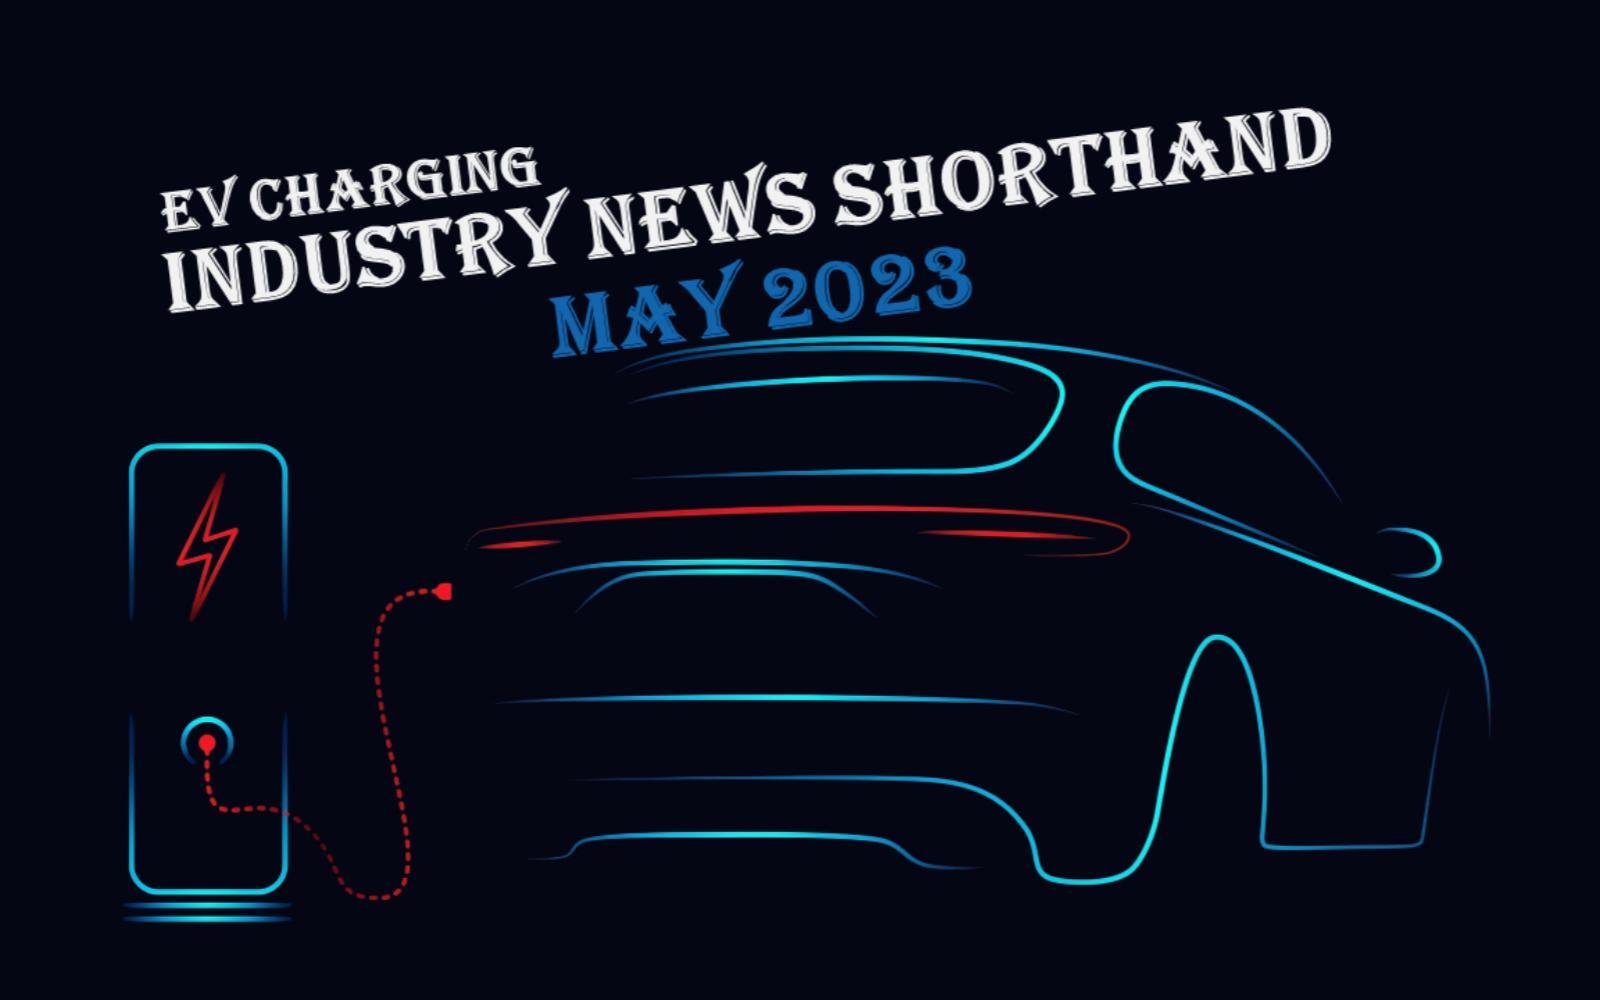 May 2023 EV charging industry news summary